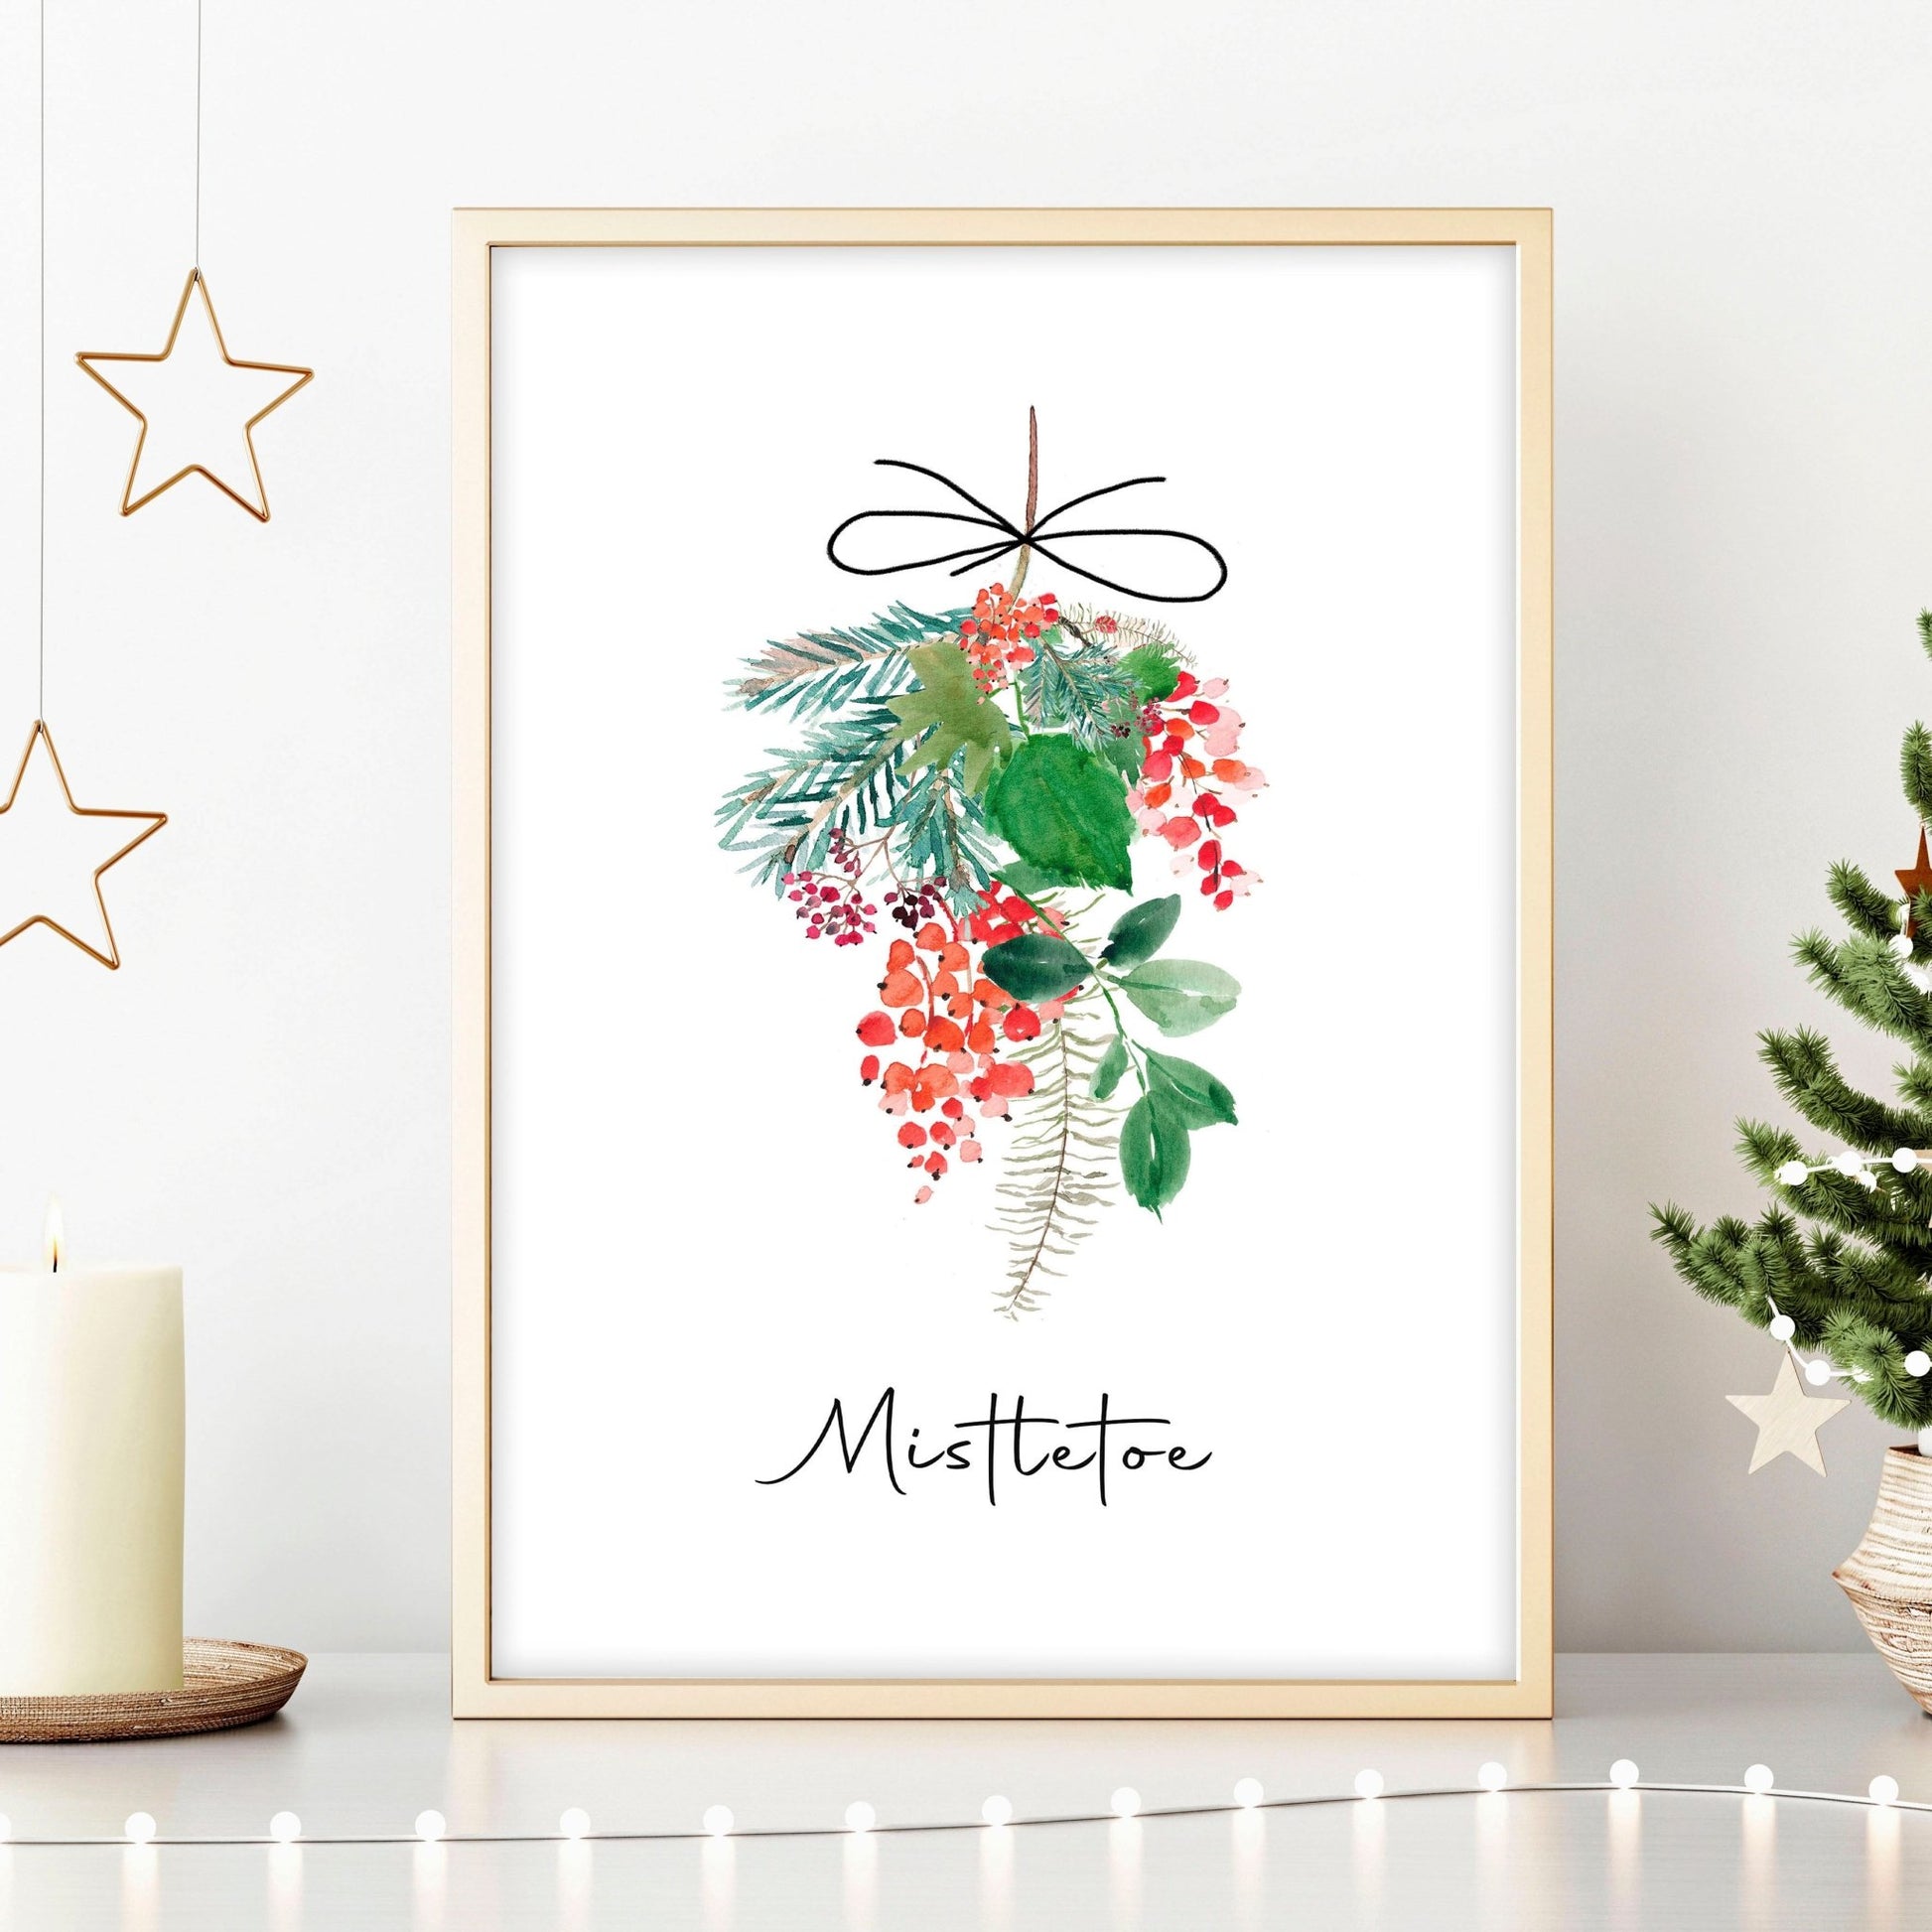 Mistletoe painting | Wall art print for Christmas decor - About Wall Art